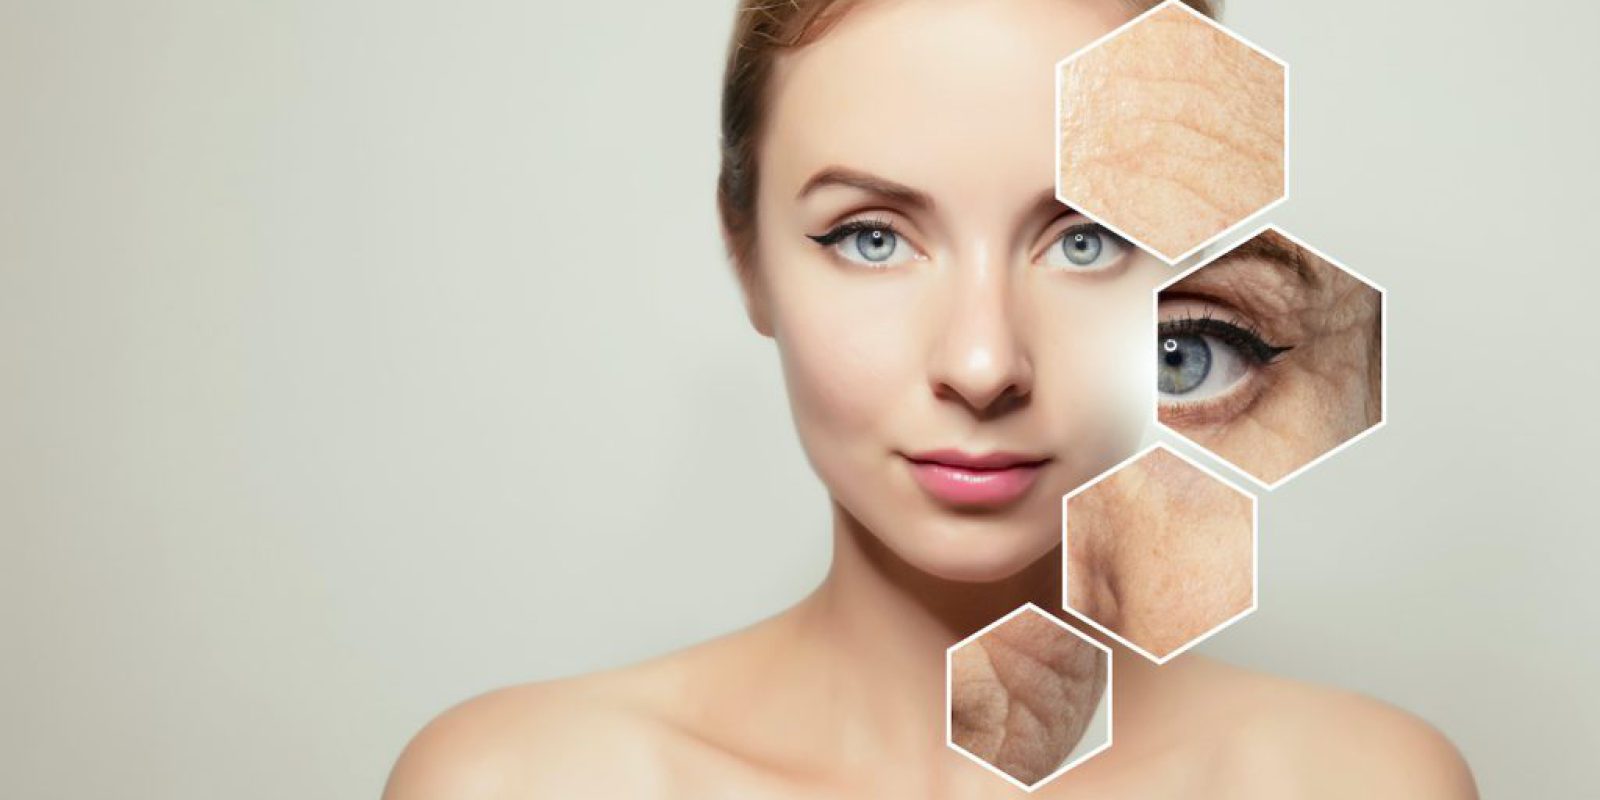 Sekret zdrowia i piękna – poznaj budowę skóry